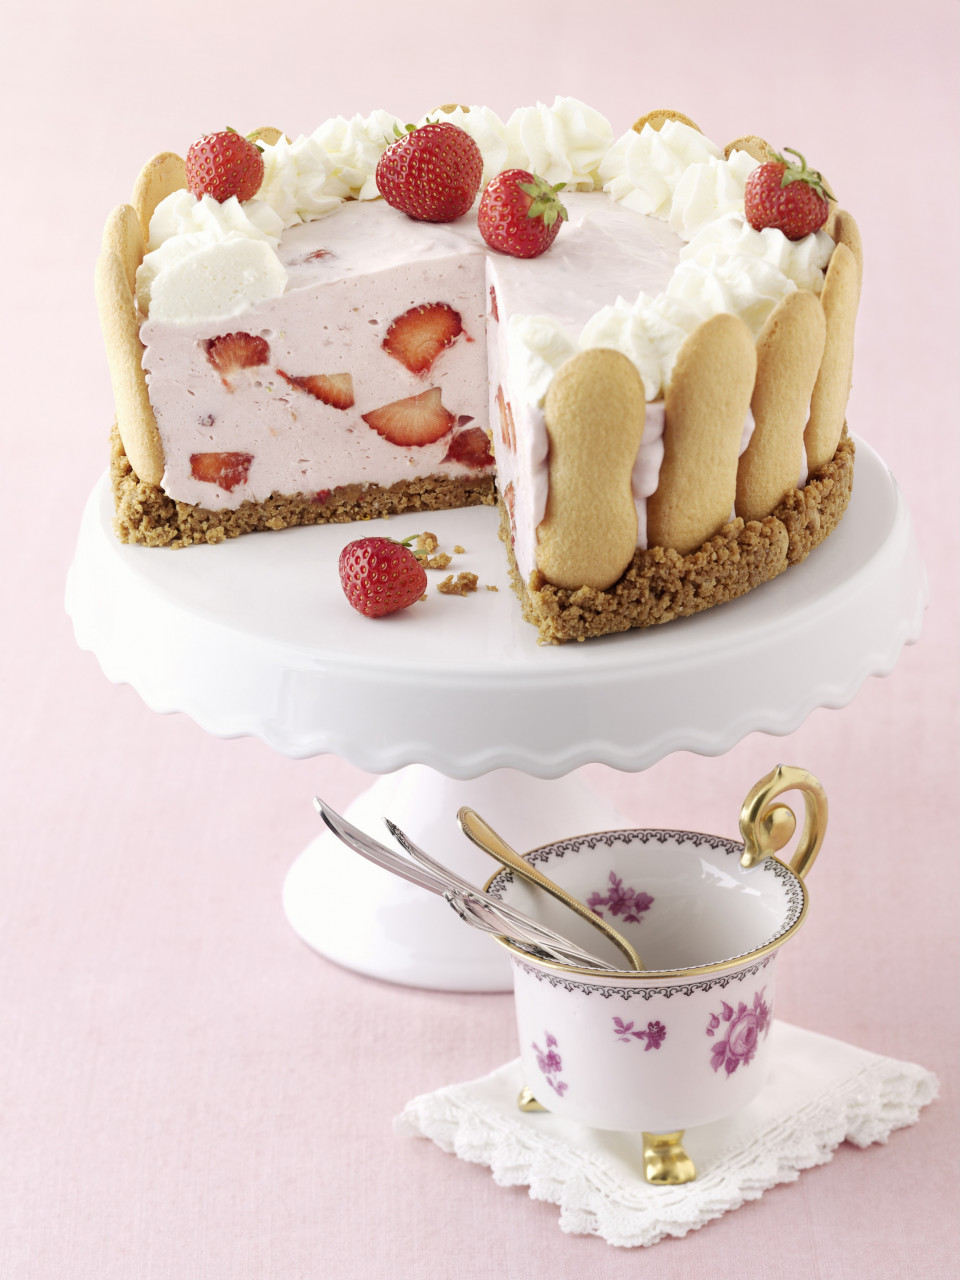 Bio Erdbeer-Himbeer-Charlotte-Torte (ohne Backen)